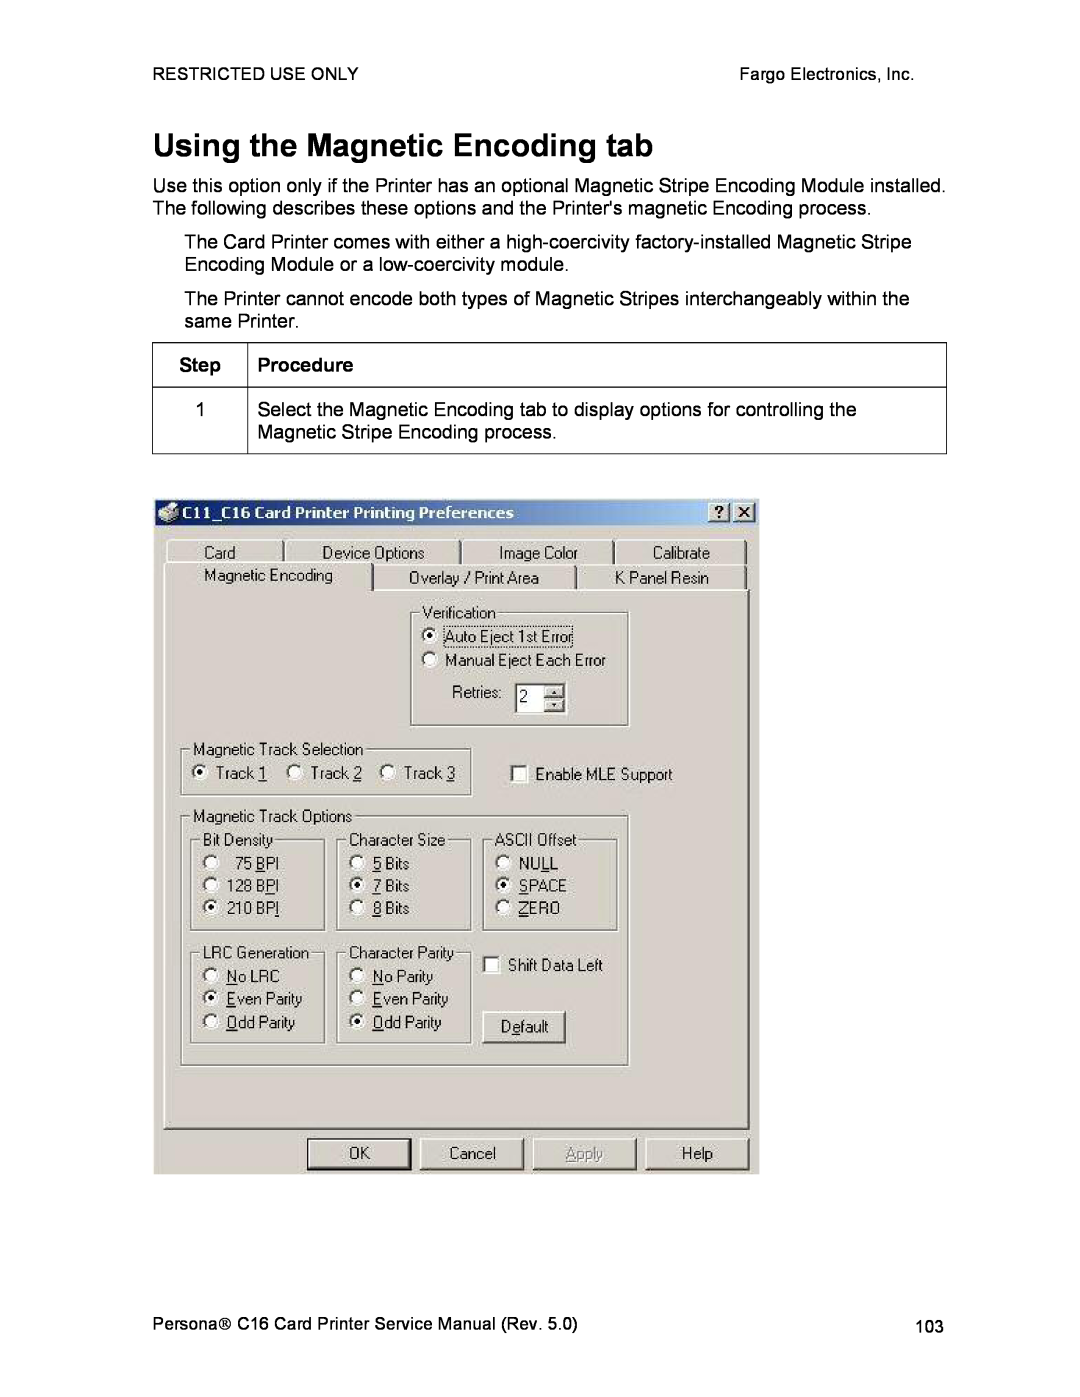 FARGO electronic C16 service manual Using the Magnetic Encoding tab 